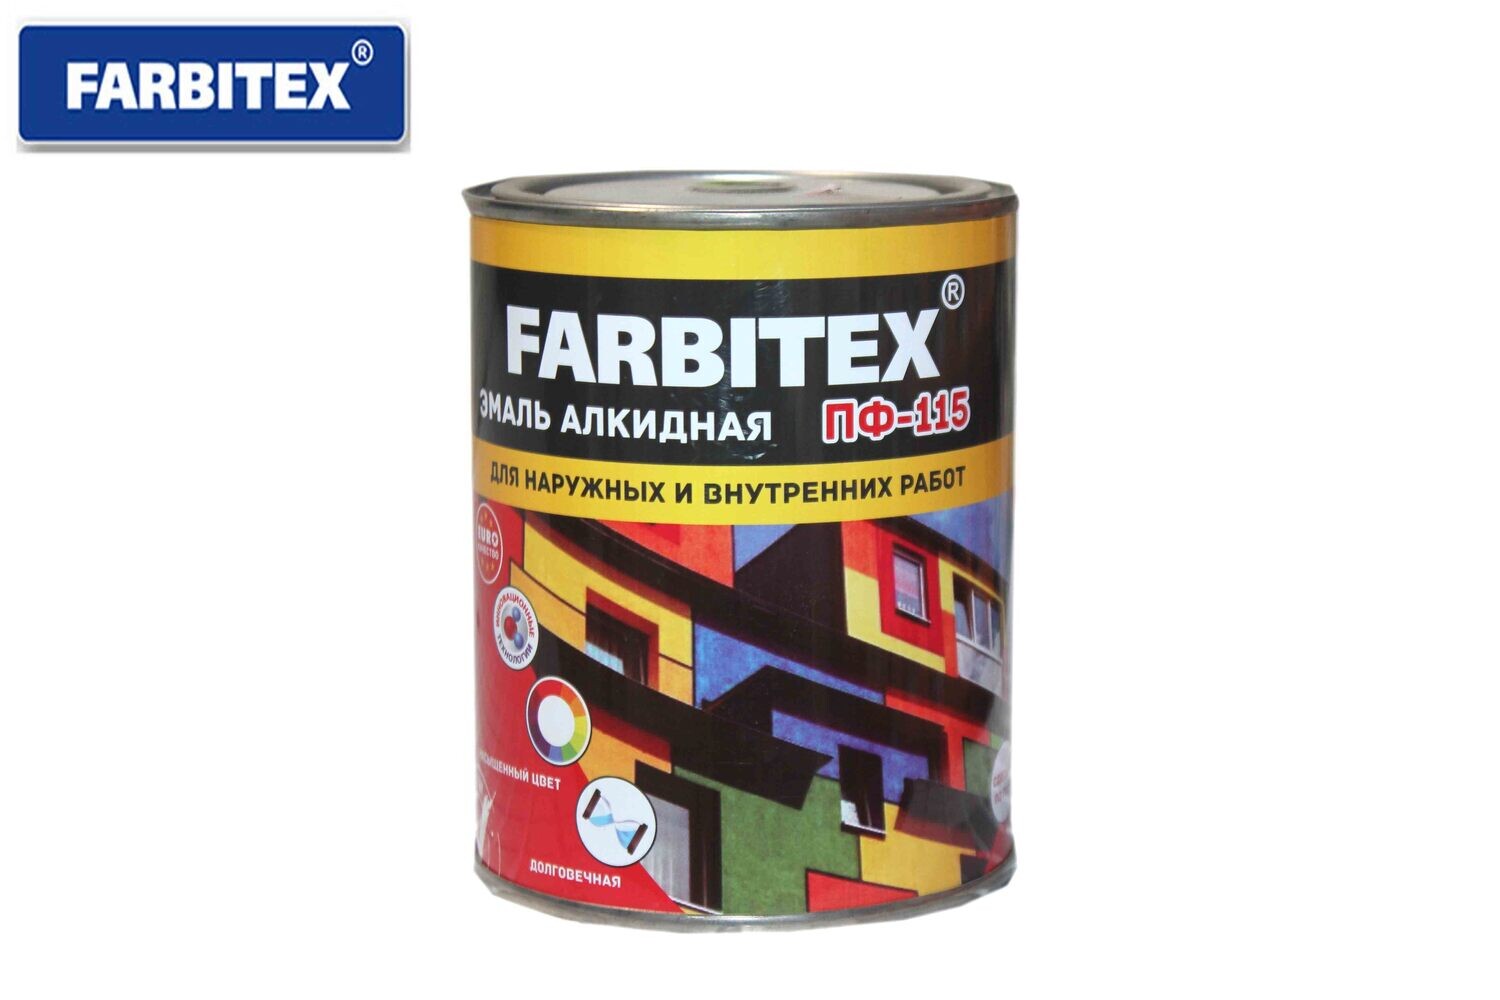 Ա էմալ ալկիդ. ՊՖ-115 (TERAKOTOVI) Farbitex ( 0.8 կգ.)